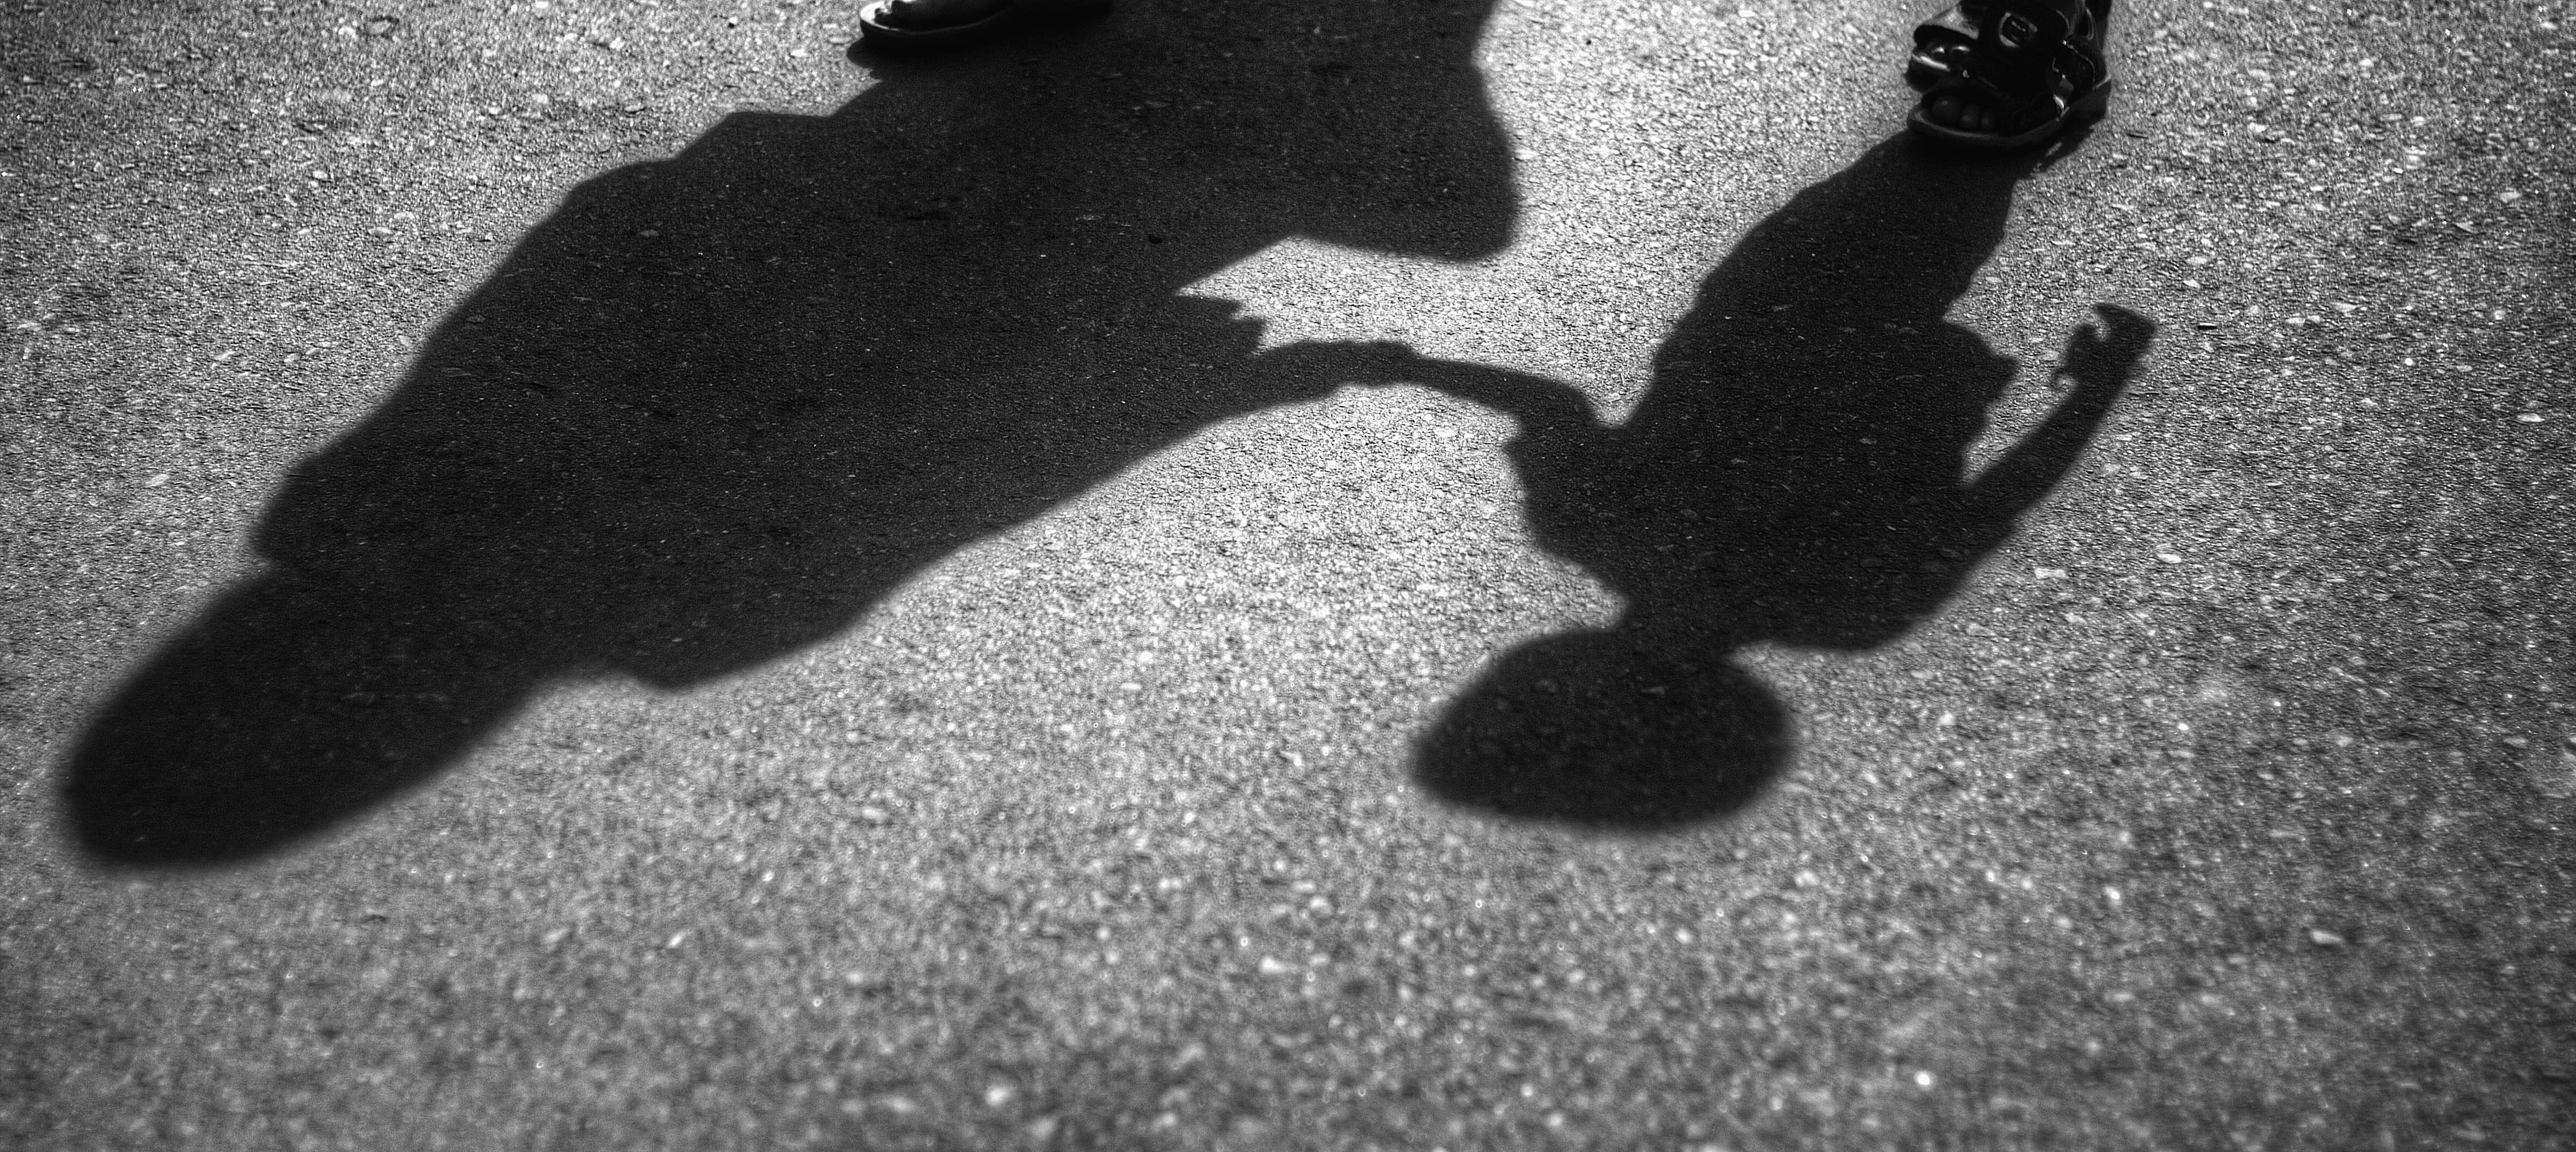 Sombras de madre e hijo sobre el pavimento. | Foto: Shutterstock